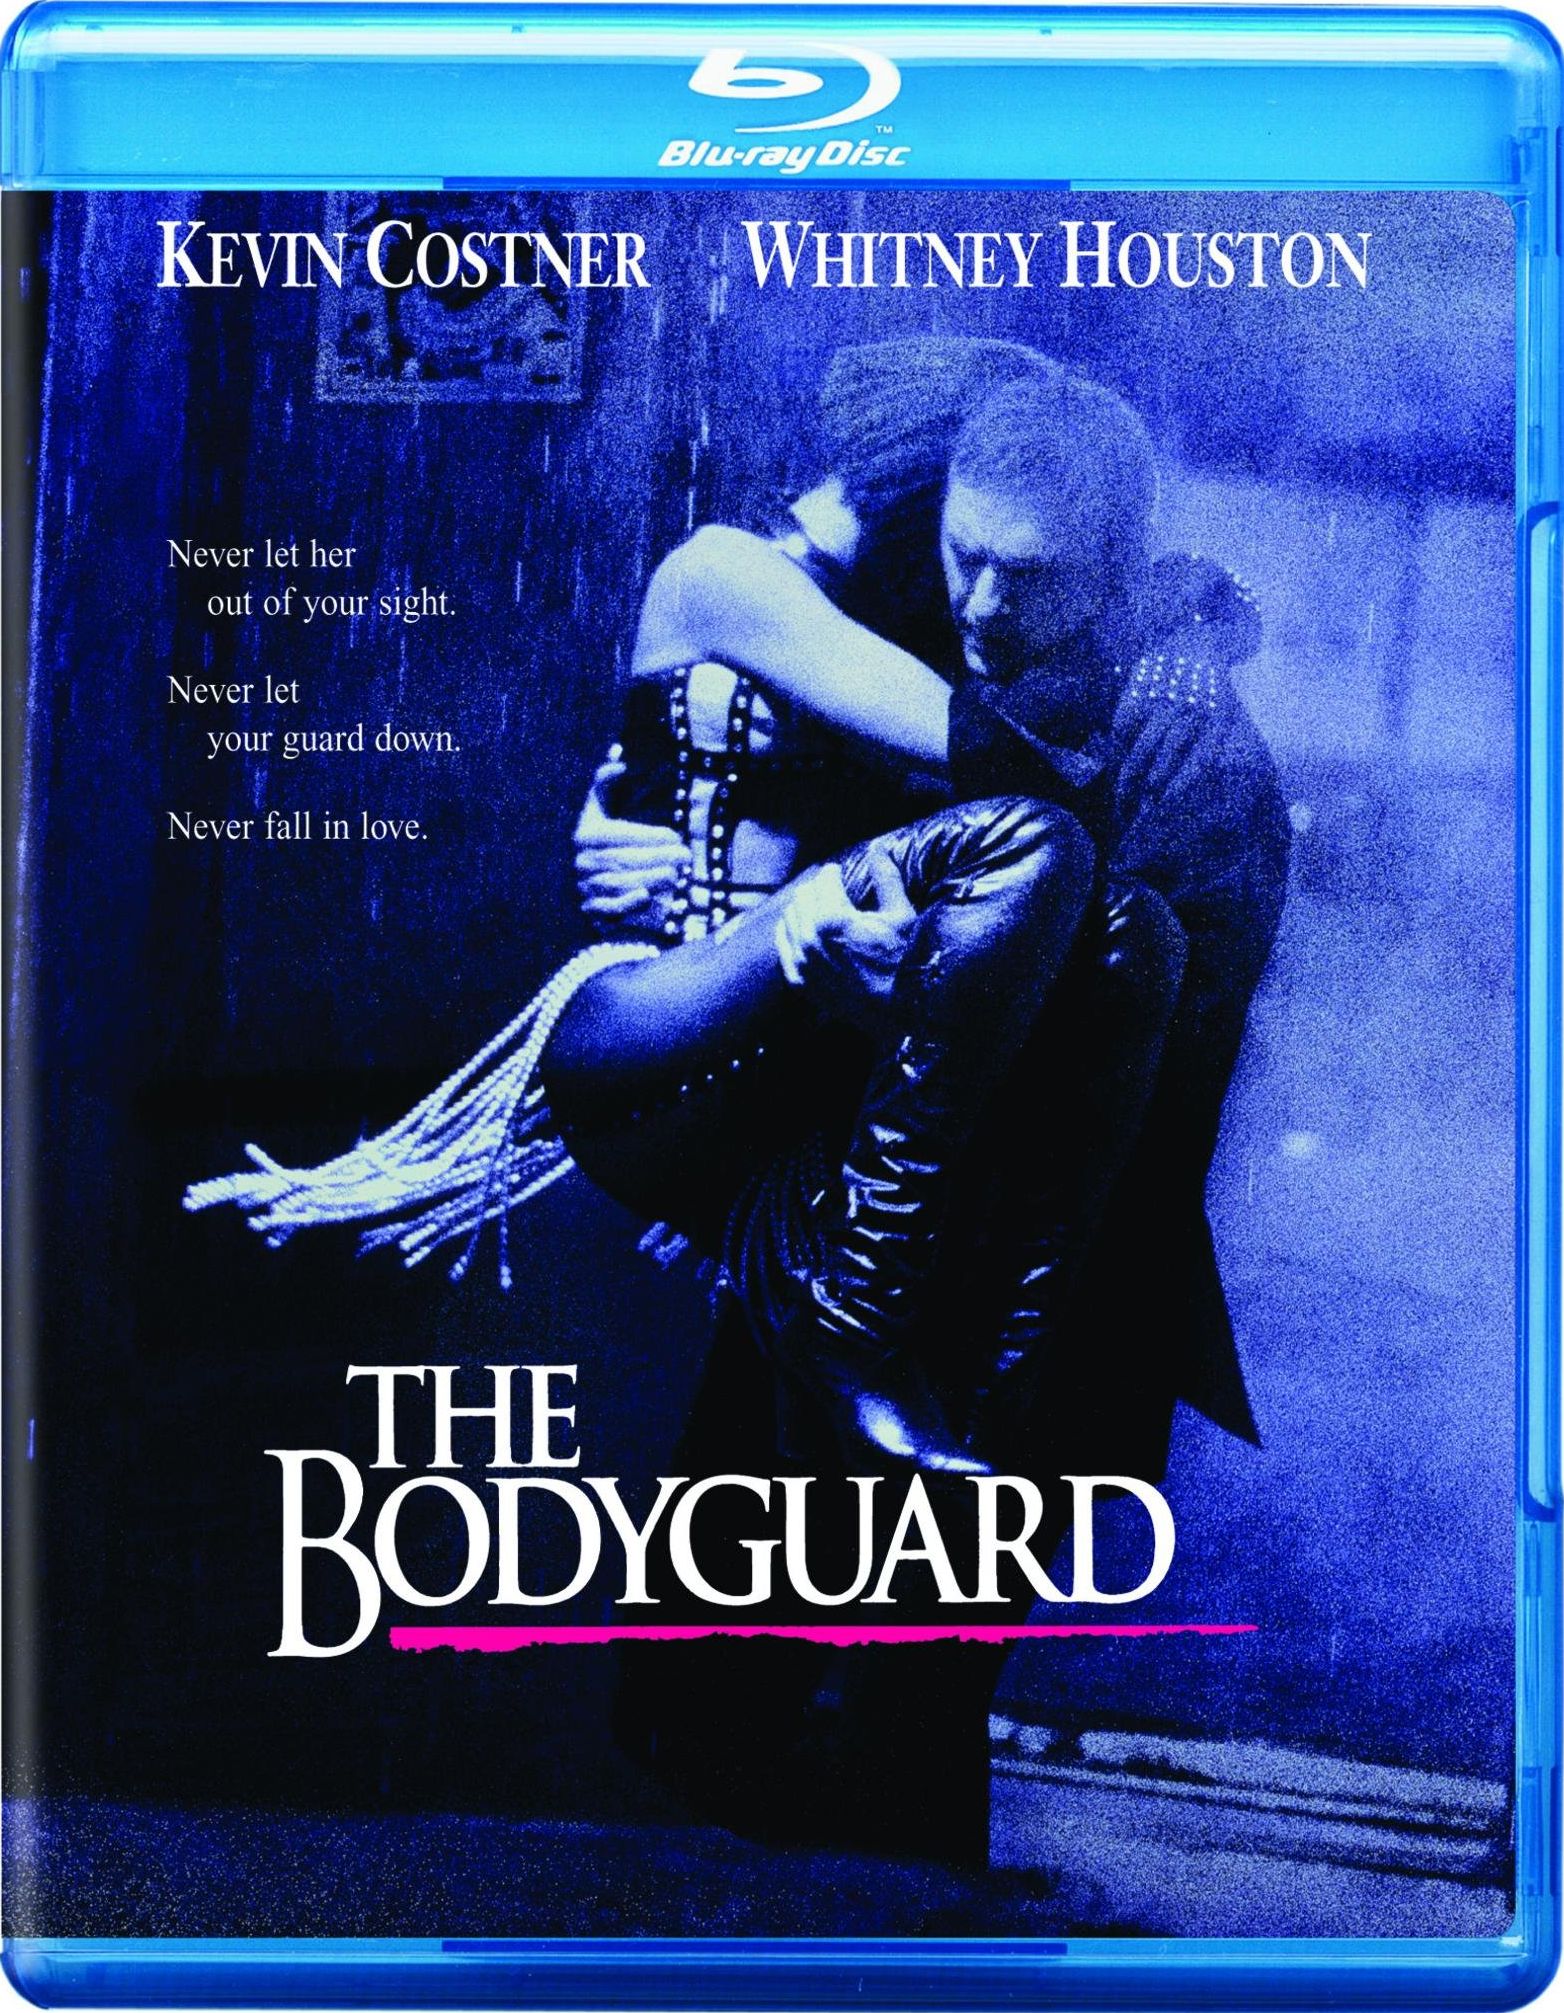 https://www.dvdsreleasedates.com/covers/the-bodyguard-blu-ray-cover-60.jpg